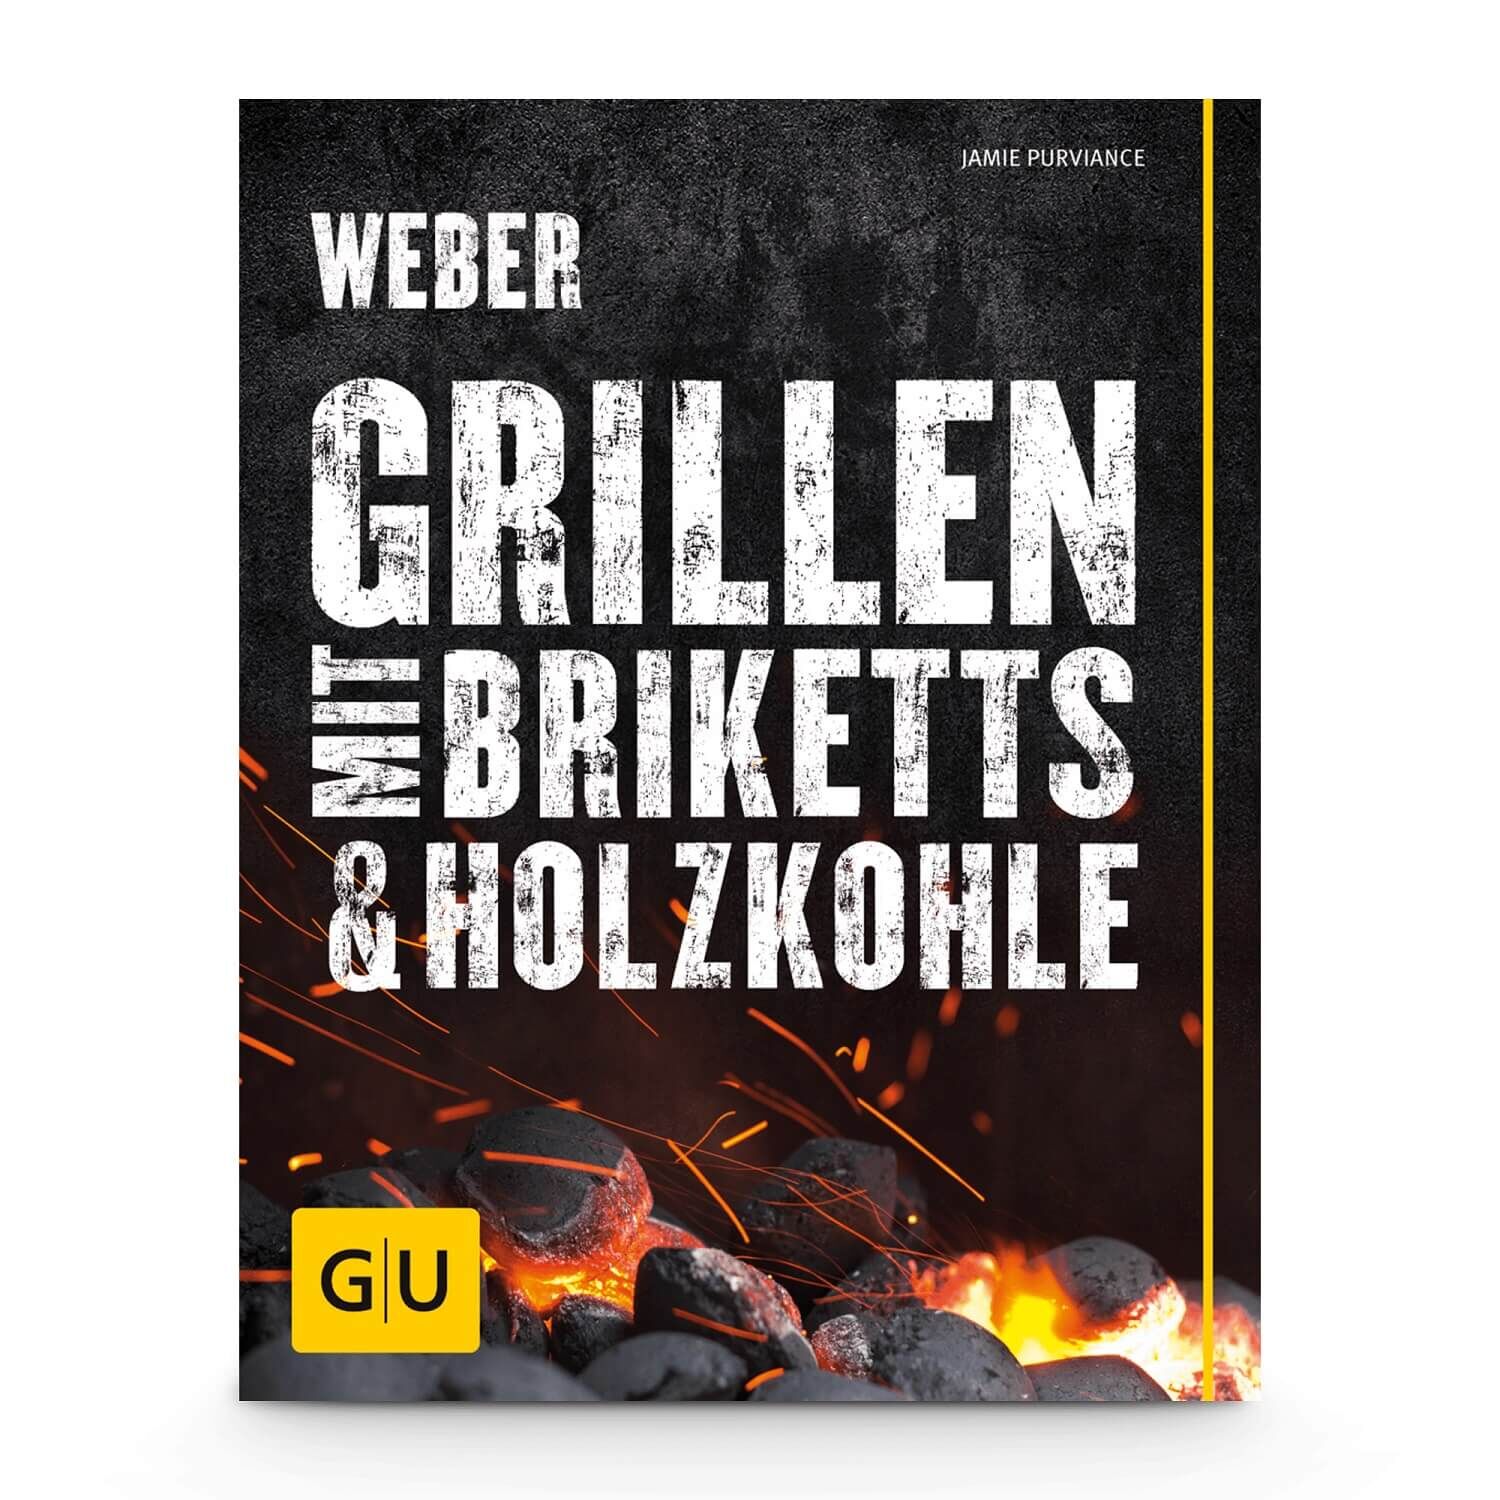 Weber's Grillen mit Briketts & Holzkohle